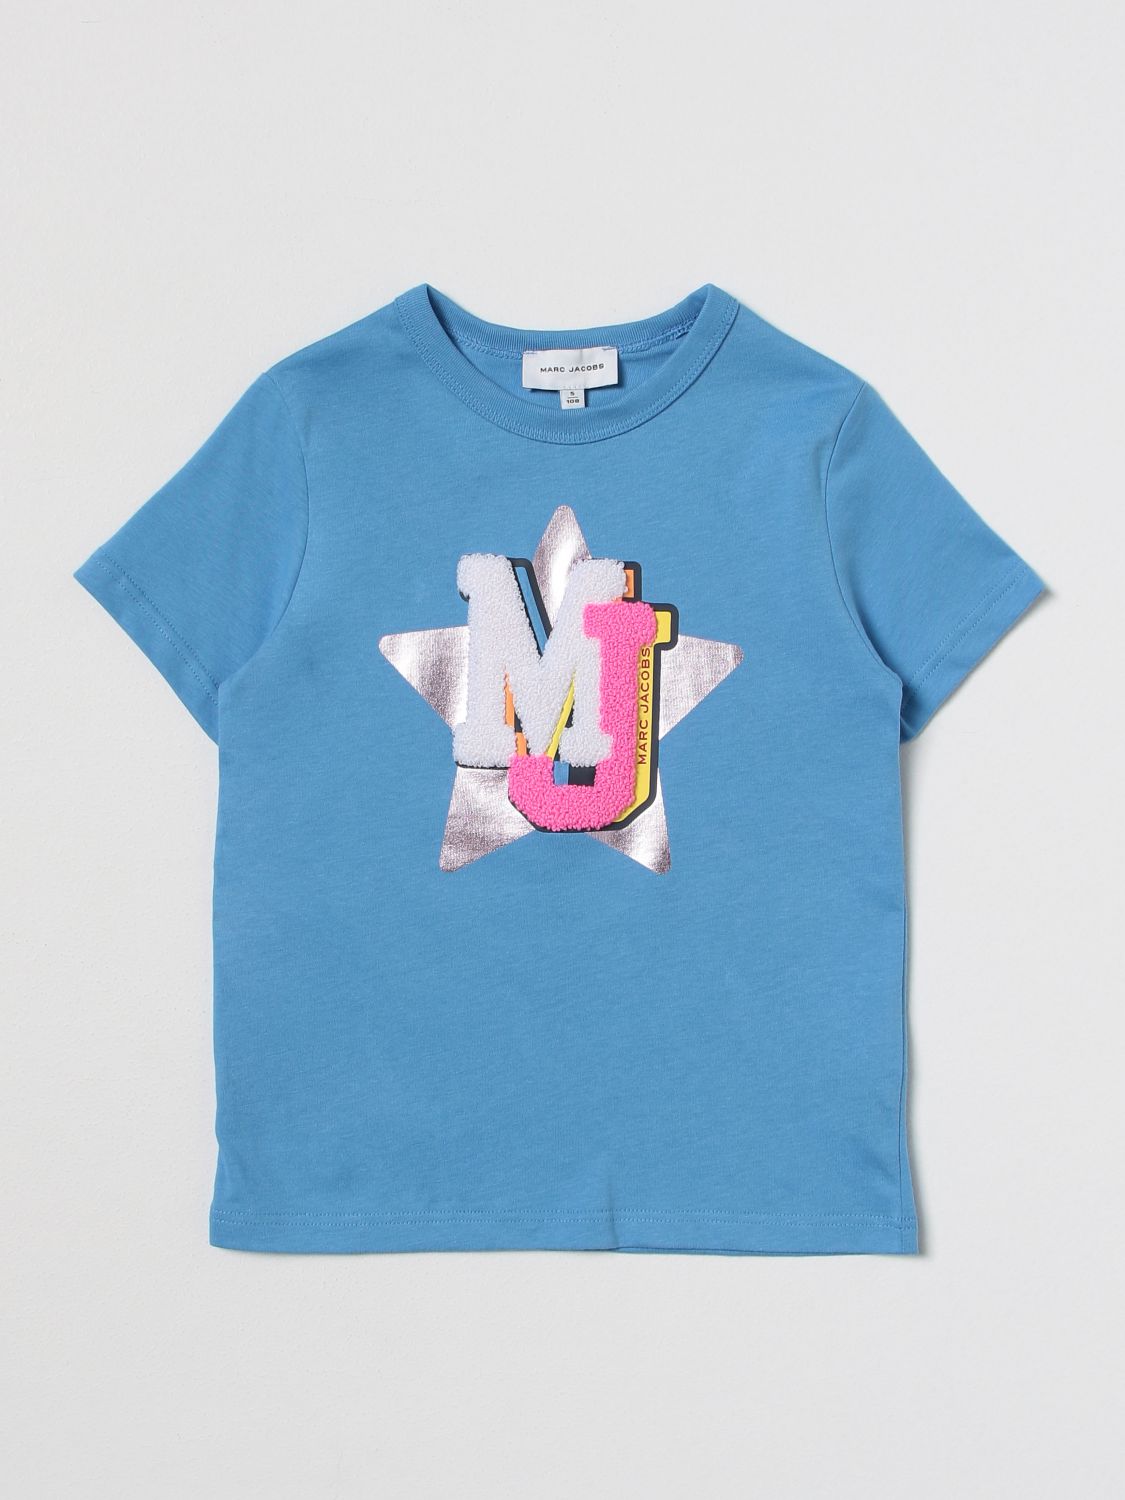 LITTLE MARC JACOBS: t-shirt for girls - Blue | Little Marc Jacobs t ...